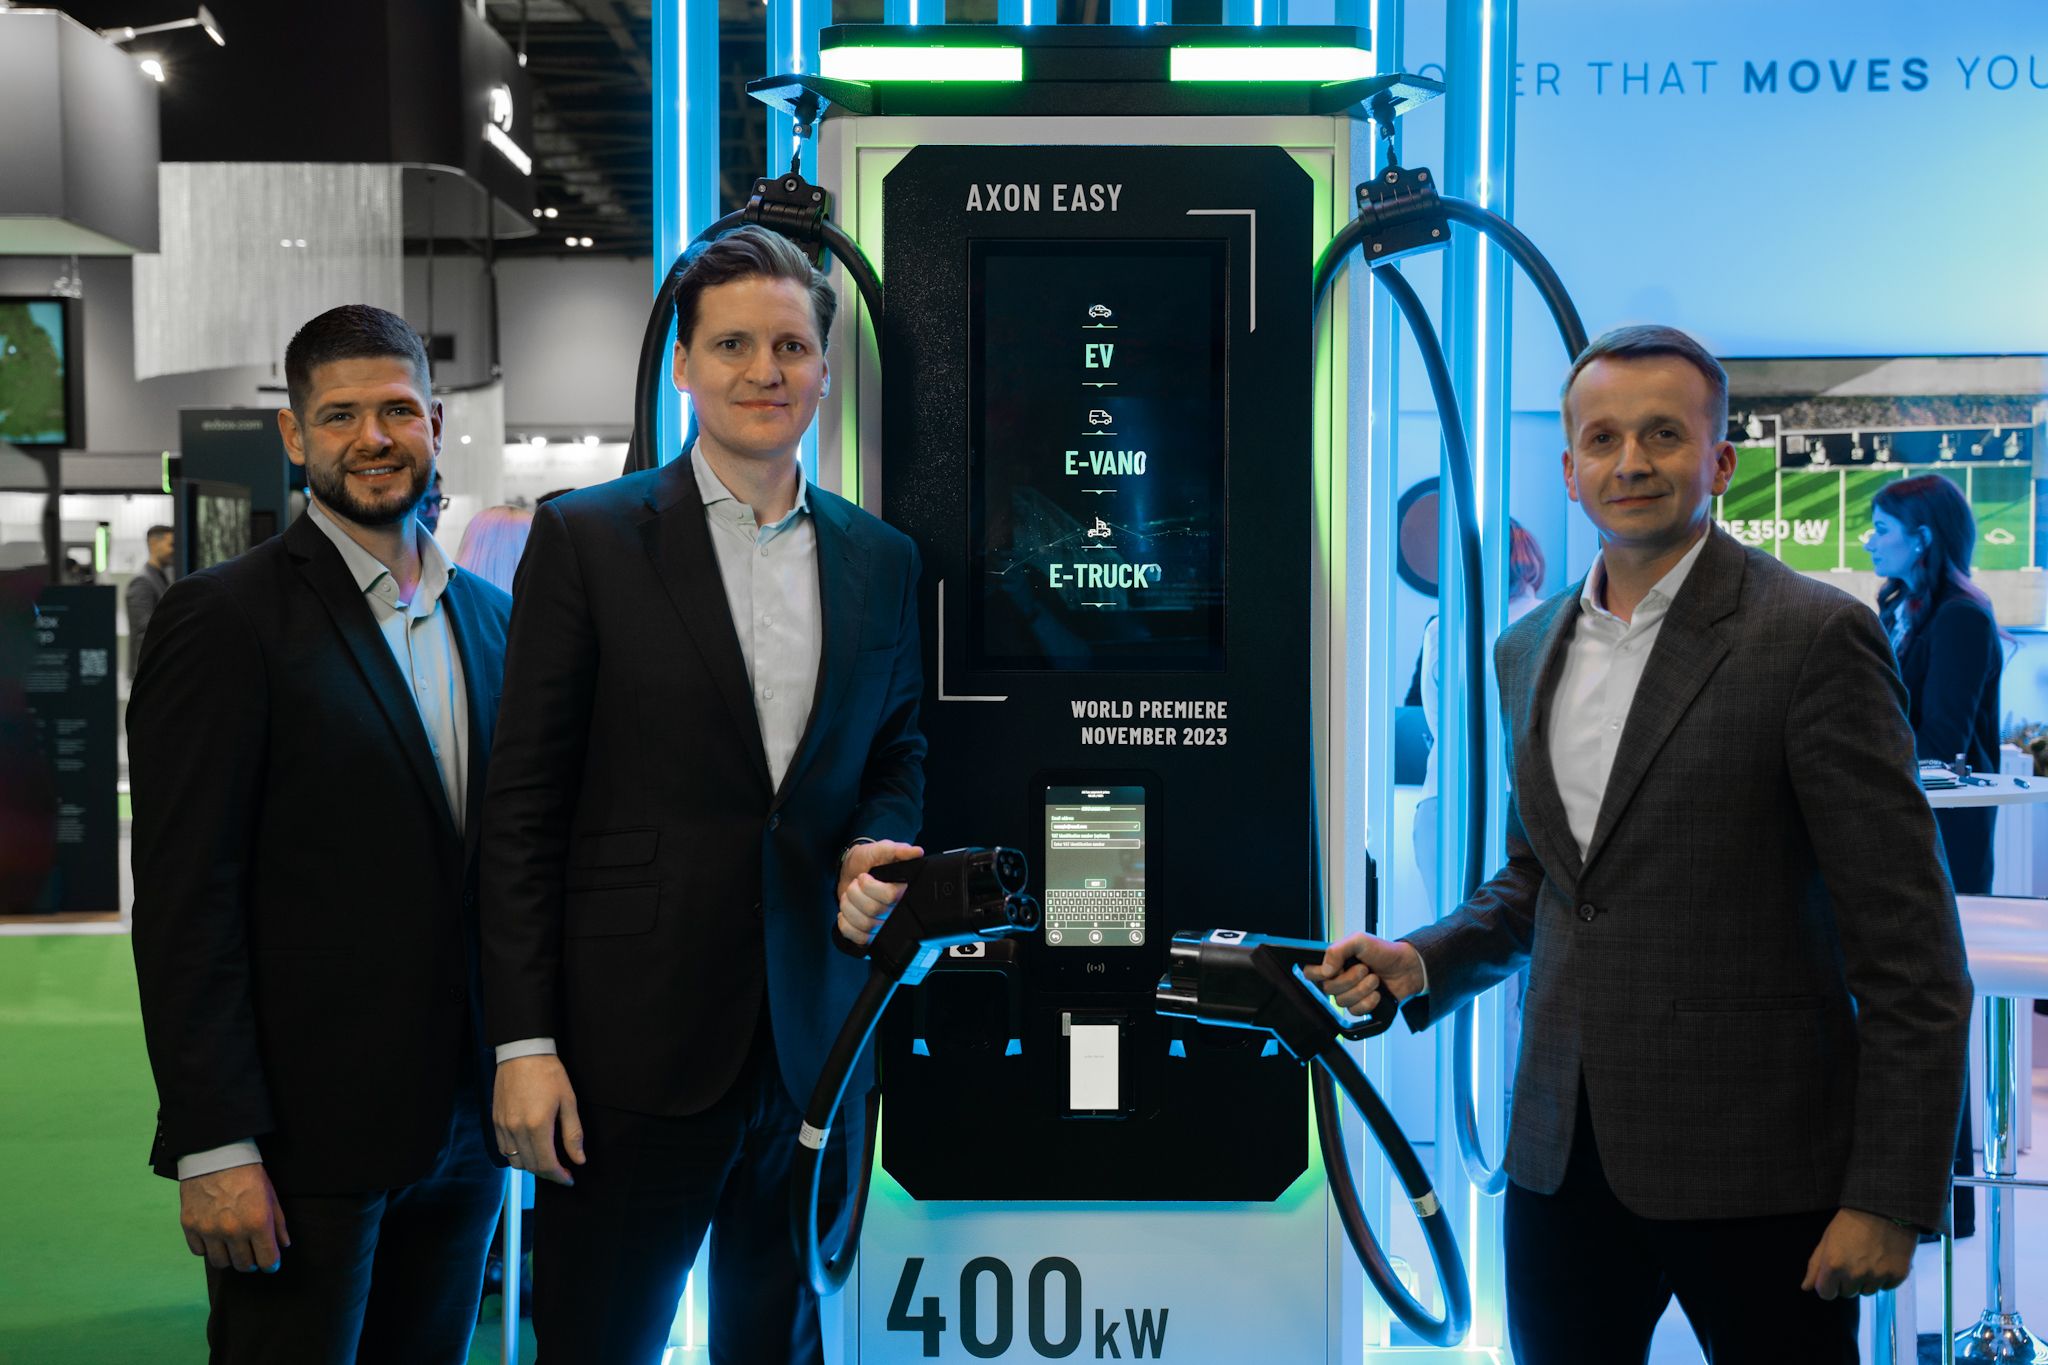 Ekoenergetyka expands partnership with ORLEN Deutschland for Axon Easy 400 EV Chargers